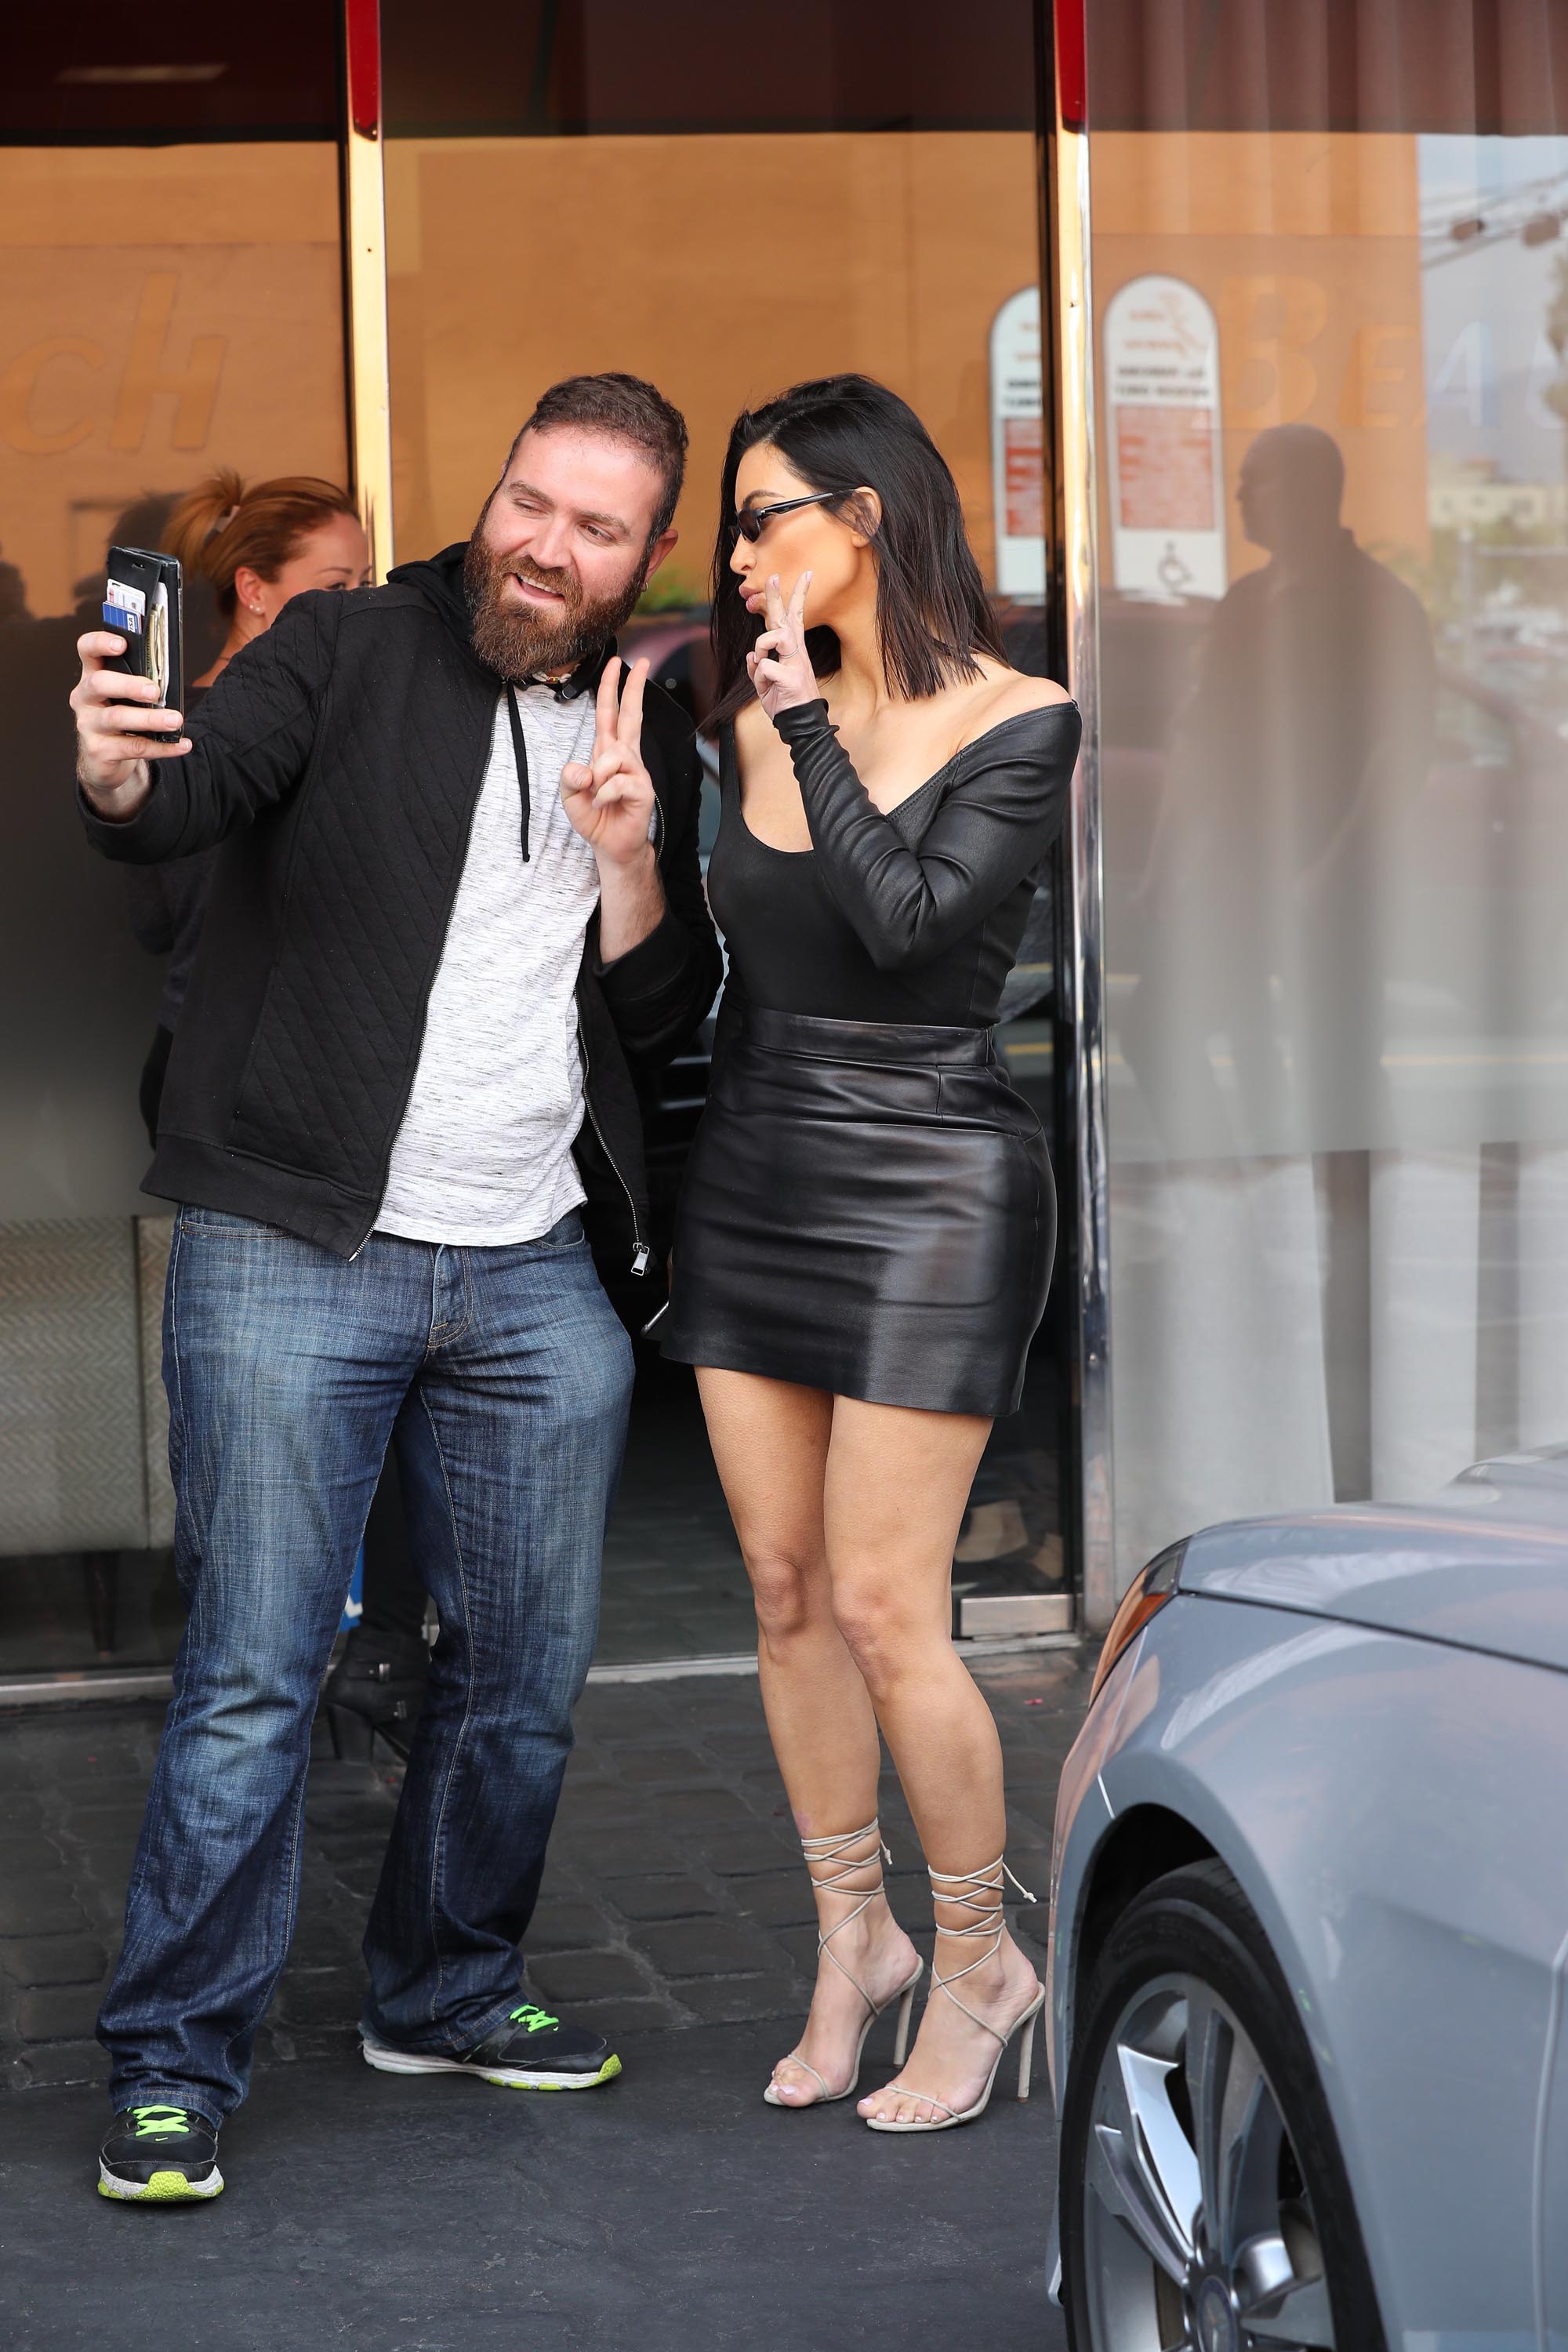 Kim Kardashian arrives to Film KUWTK